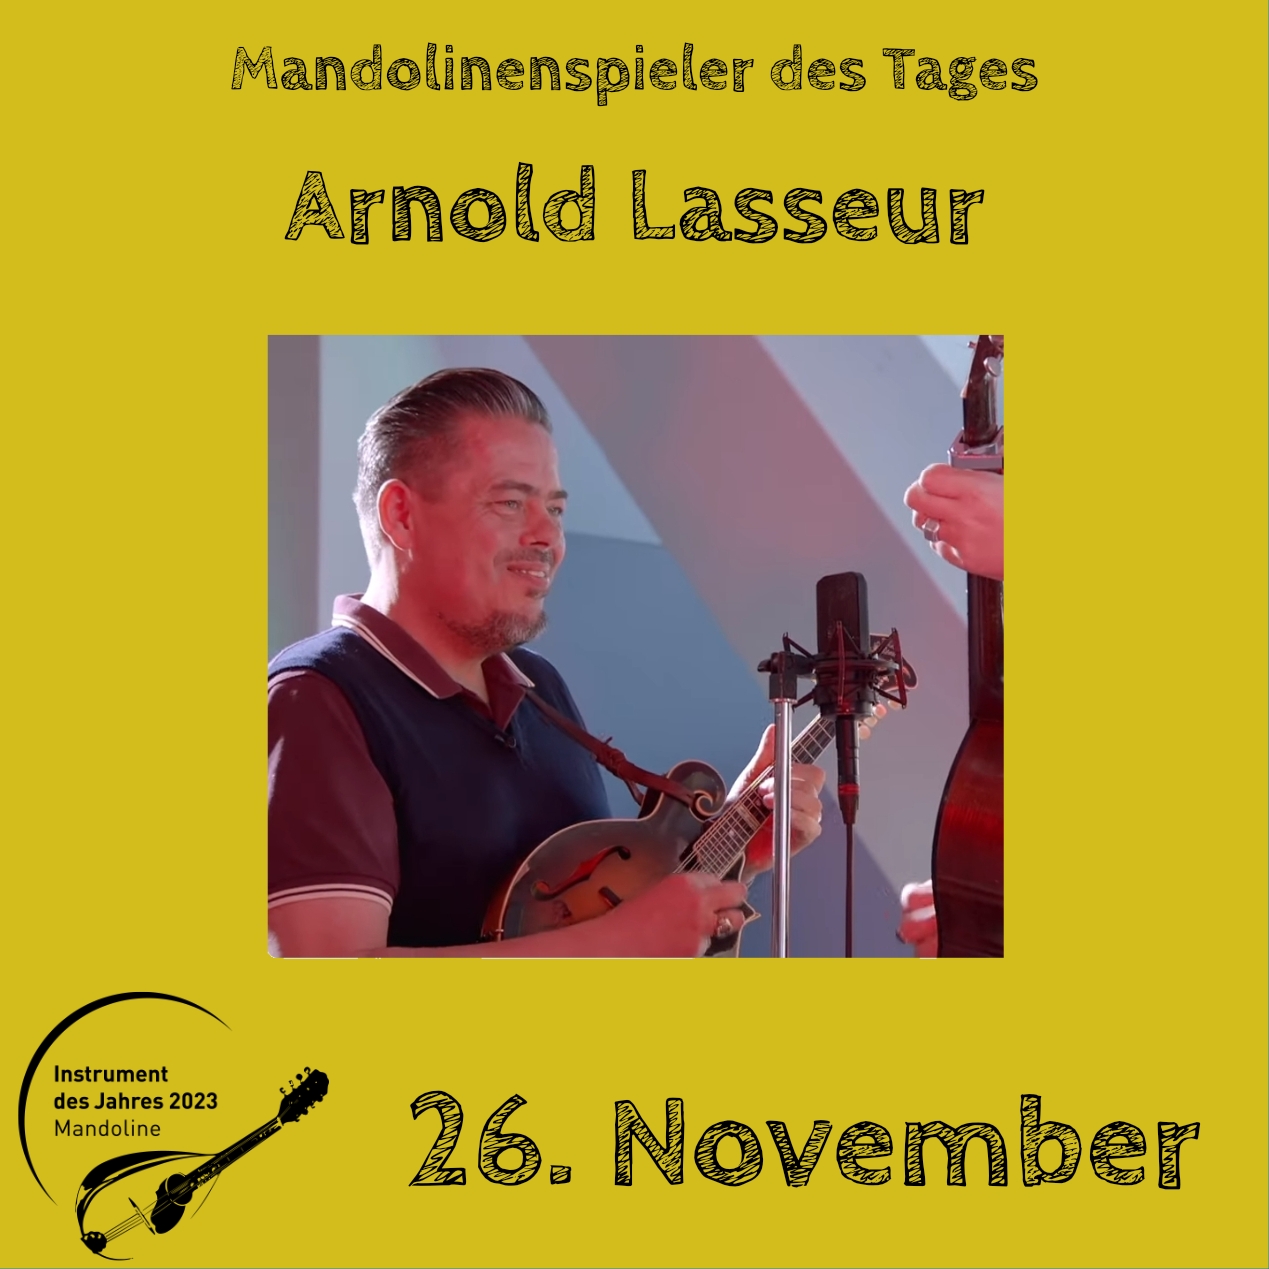 26. November - Arnold Lasseur Instrument des Jahres 2023 Mandolinenspieler Mandolinenspielerin des Tages